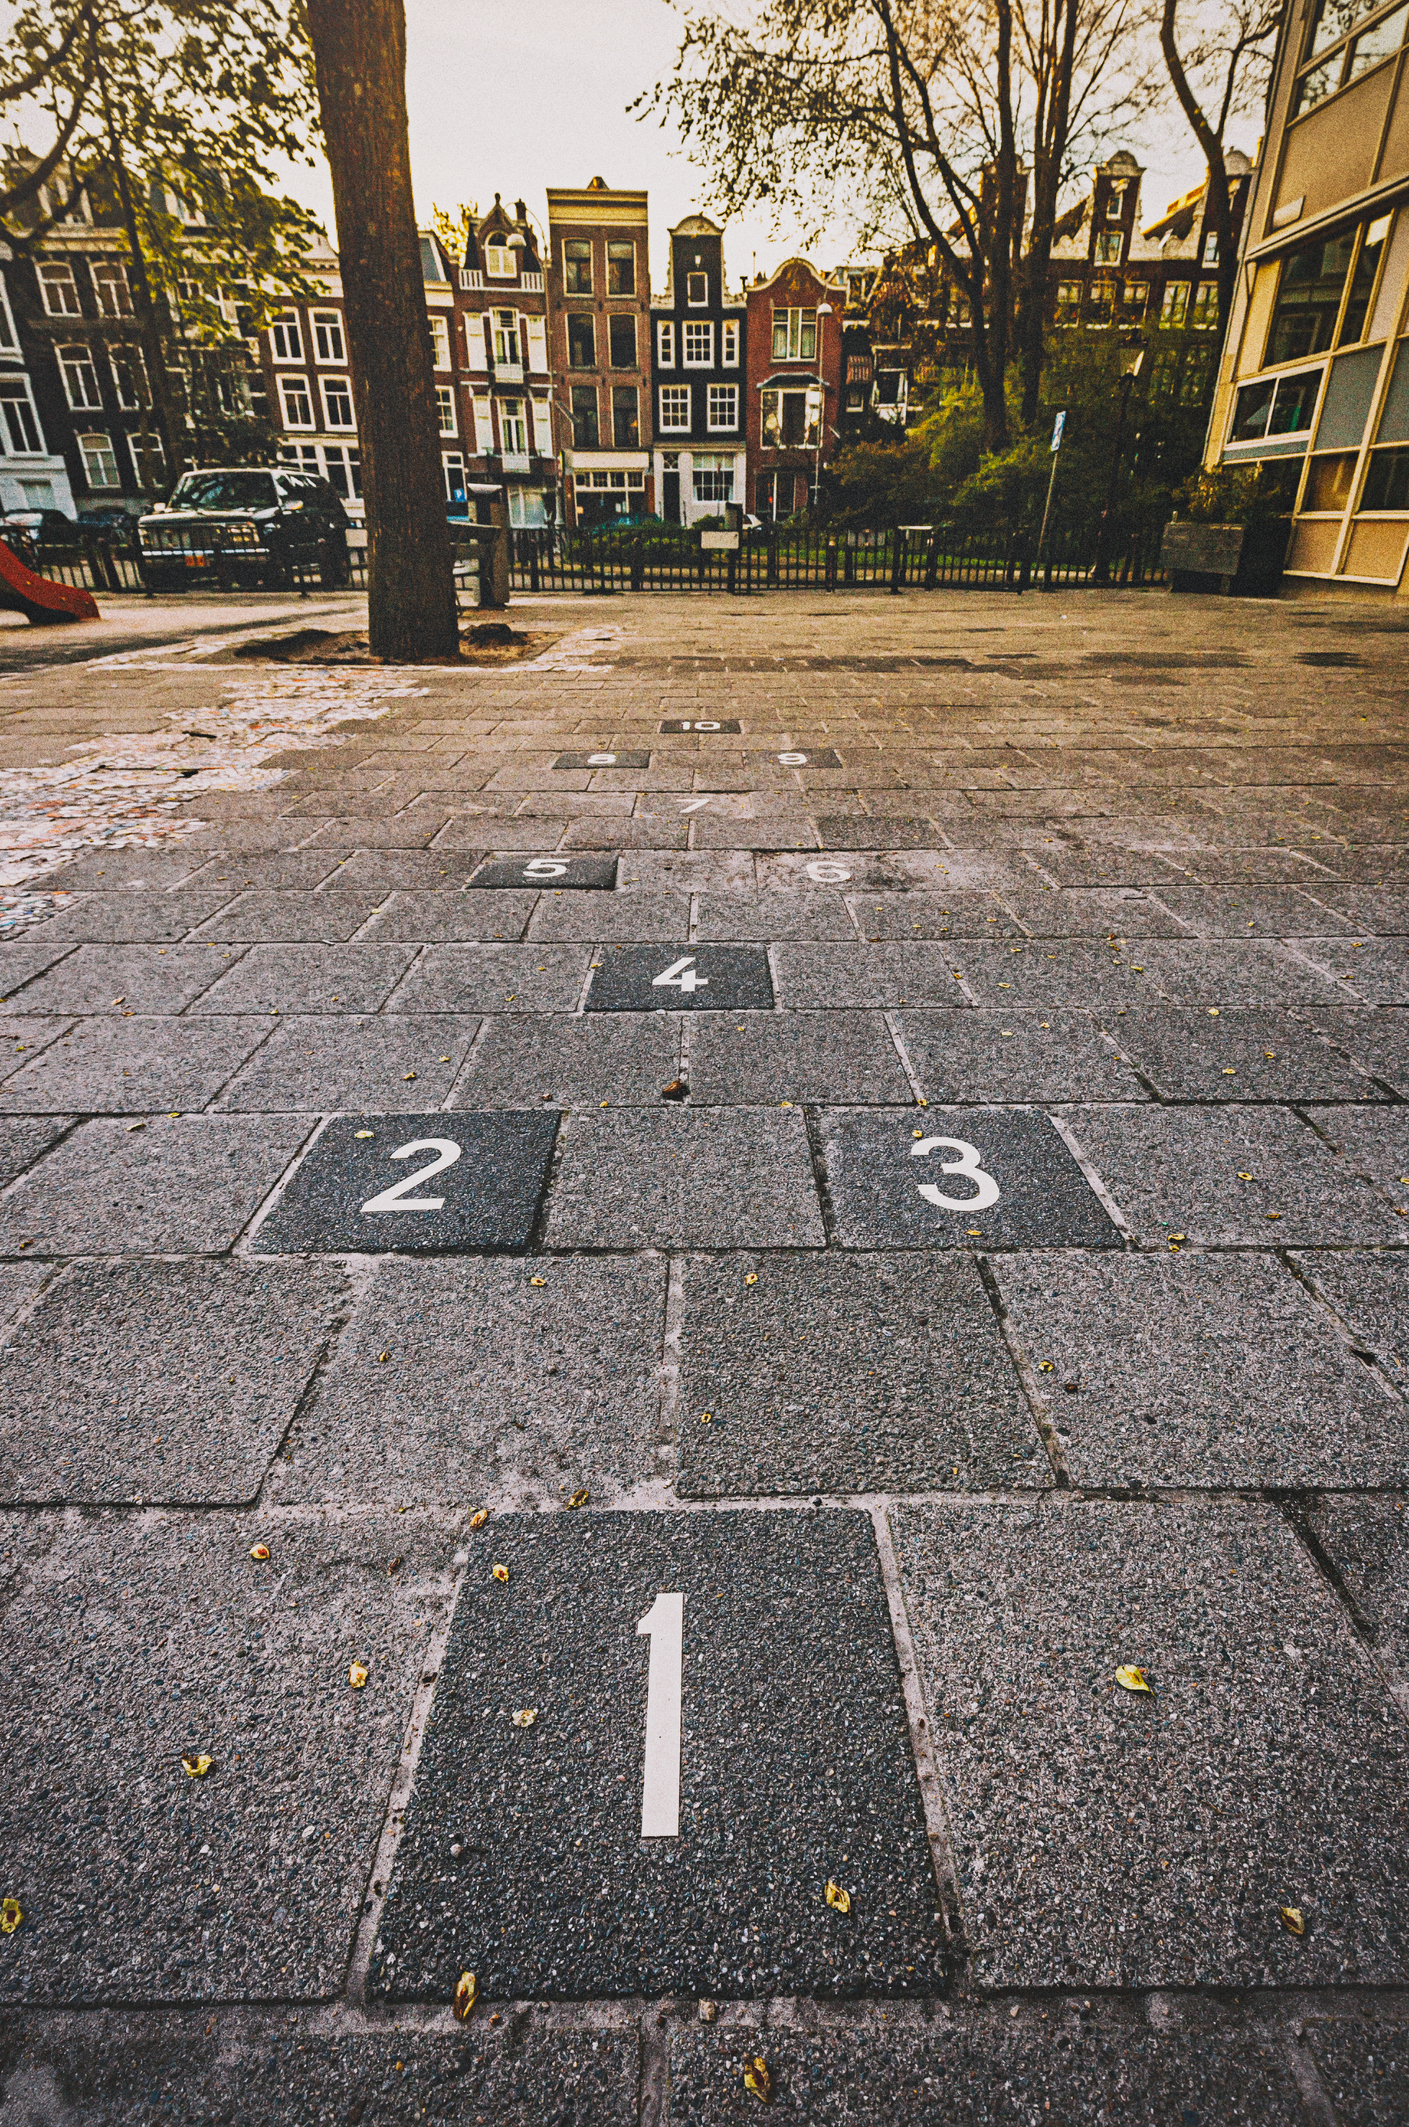 Hopscotch board drawn on street of Amsterdam, Netherlands